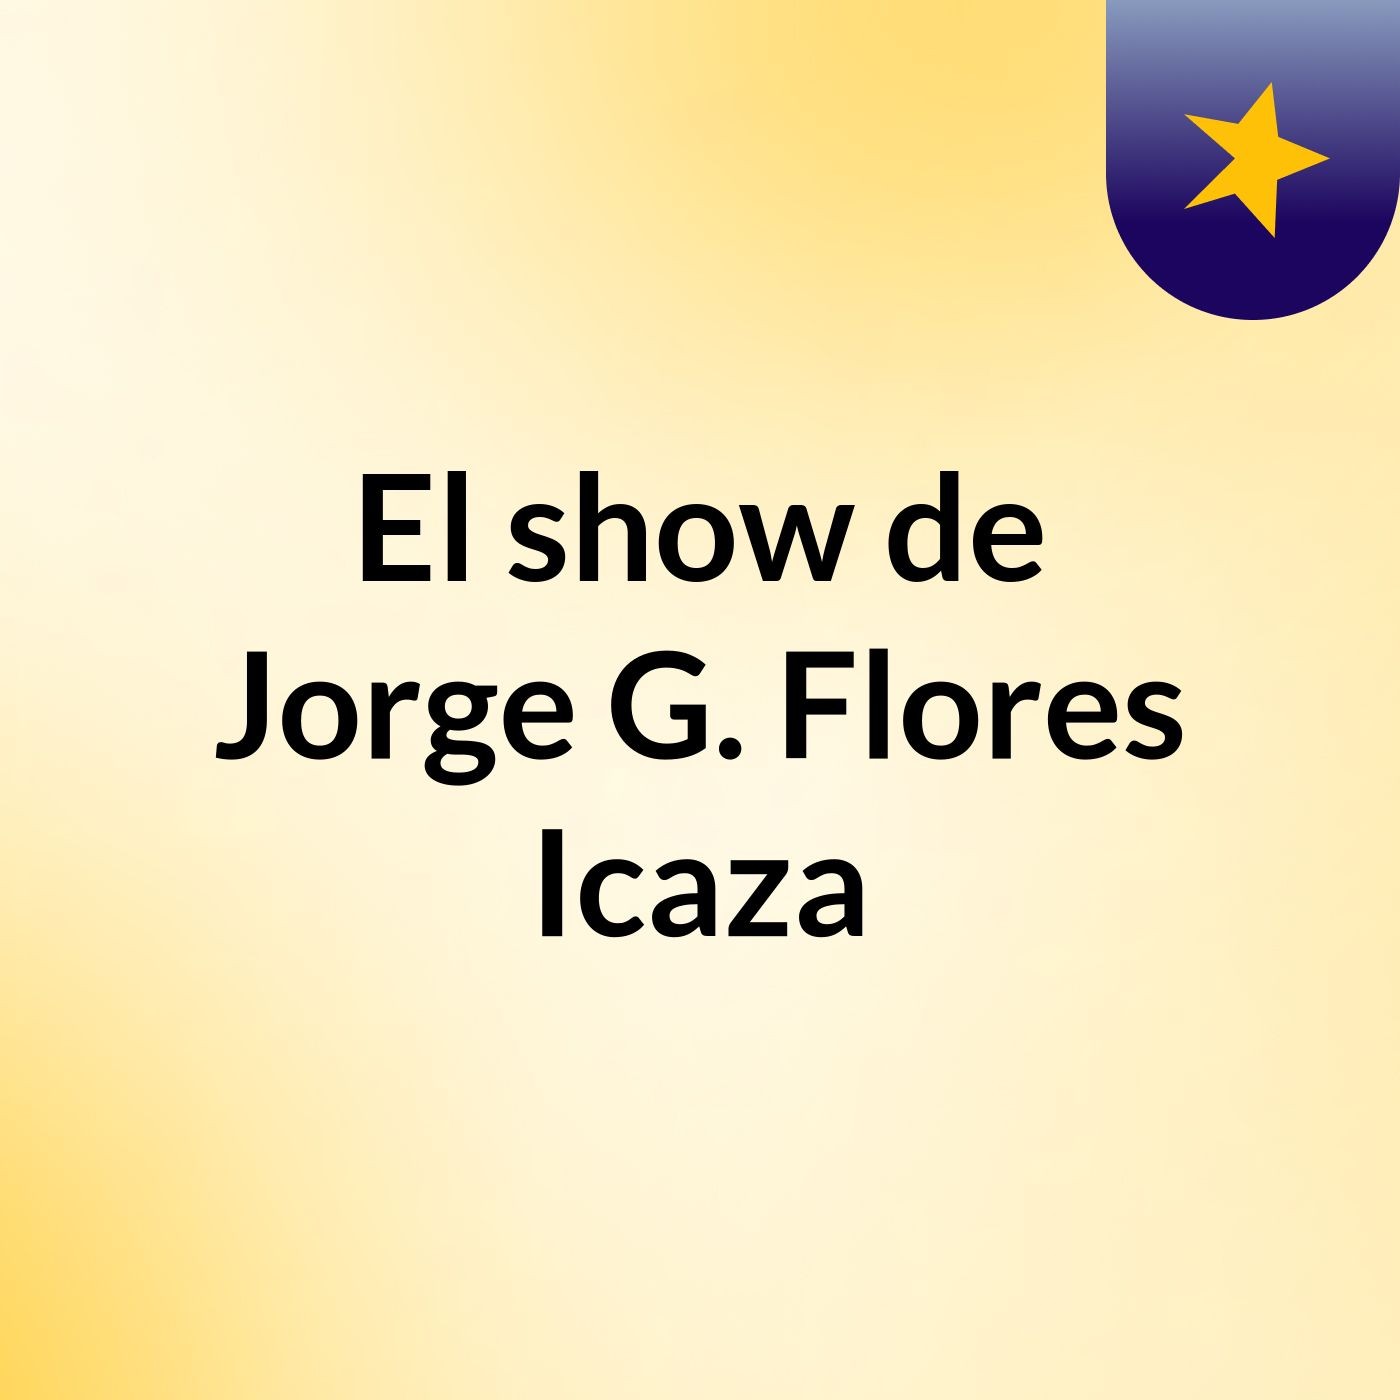 El show de Jorge G. Flores Icaza